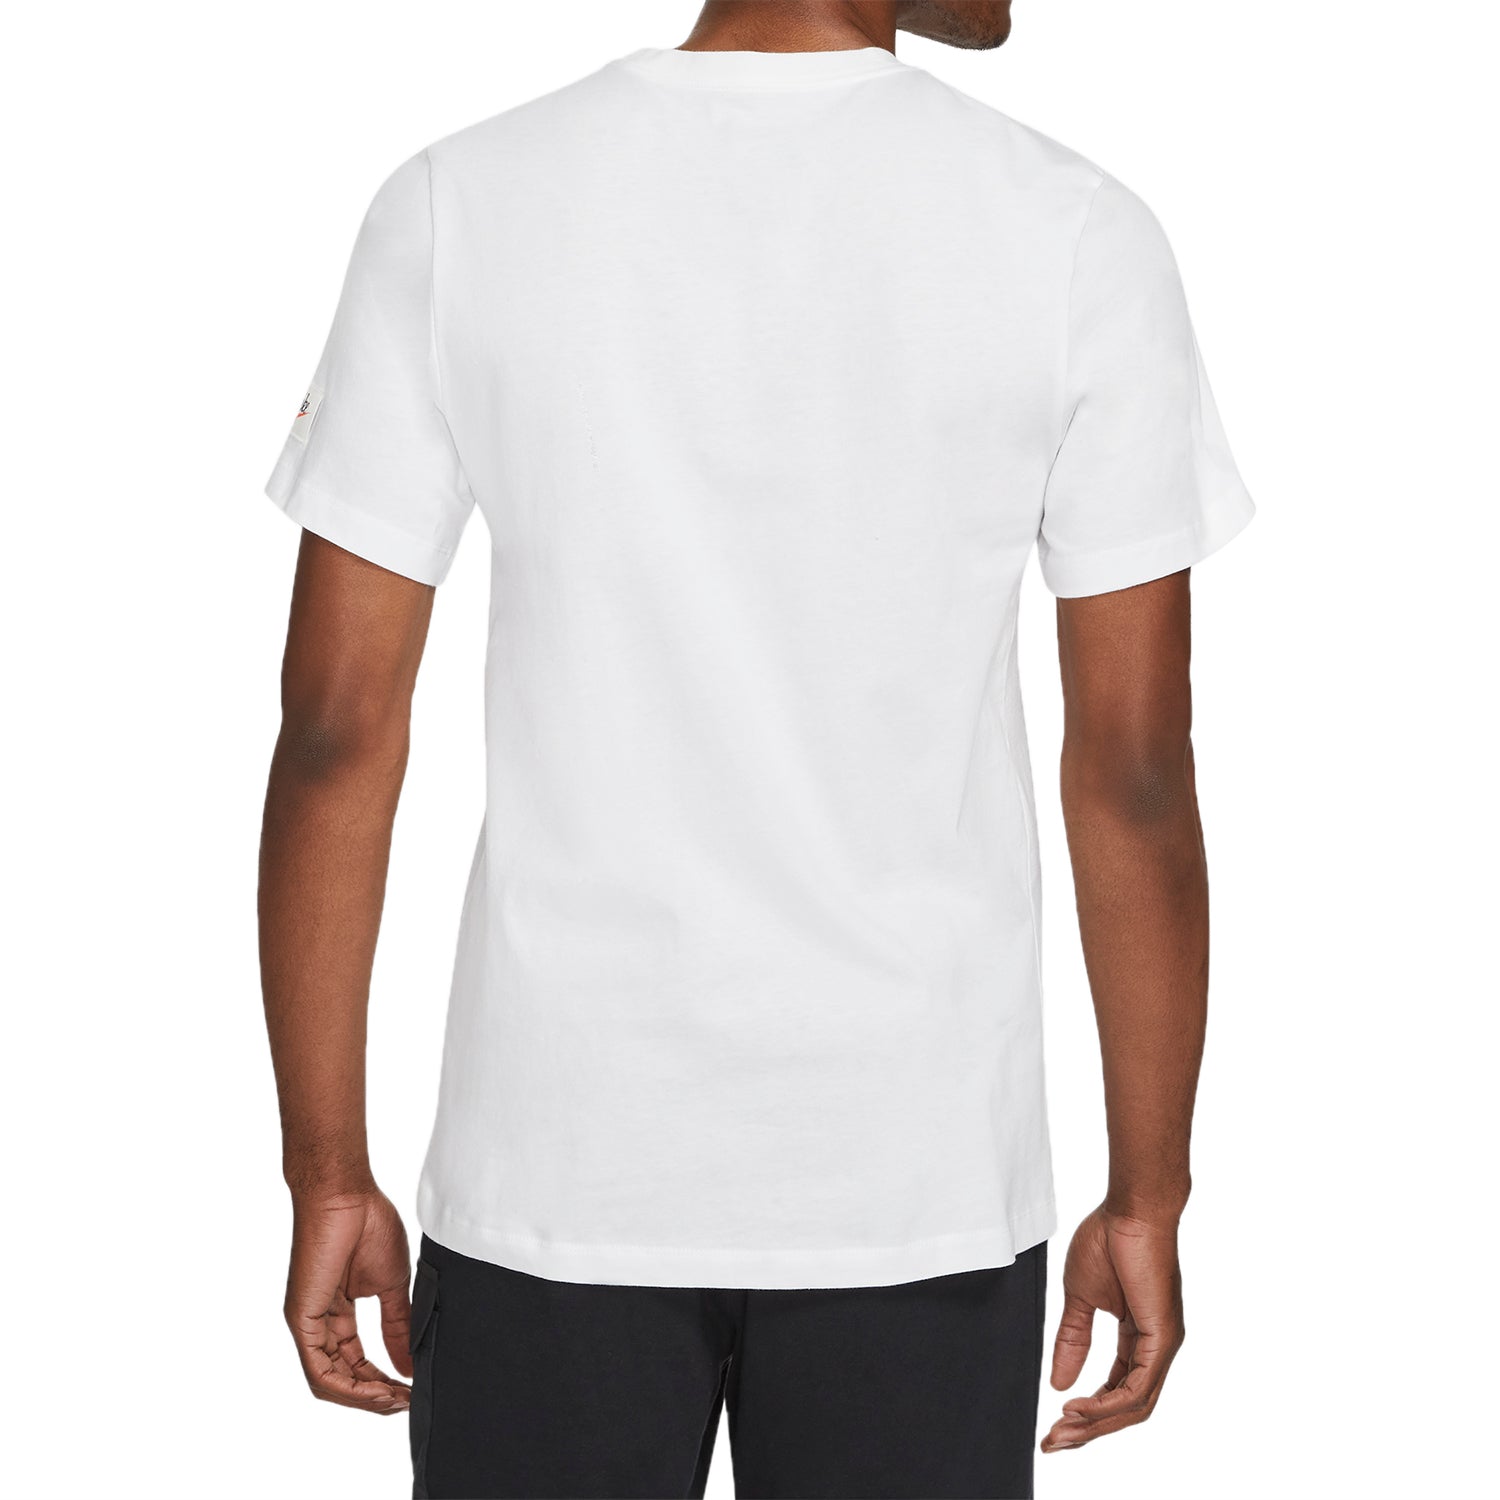 Nike Sportswear T-shirt Mens Style : Dj1387